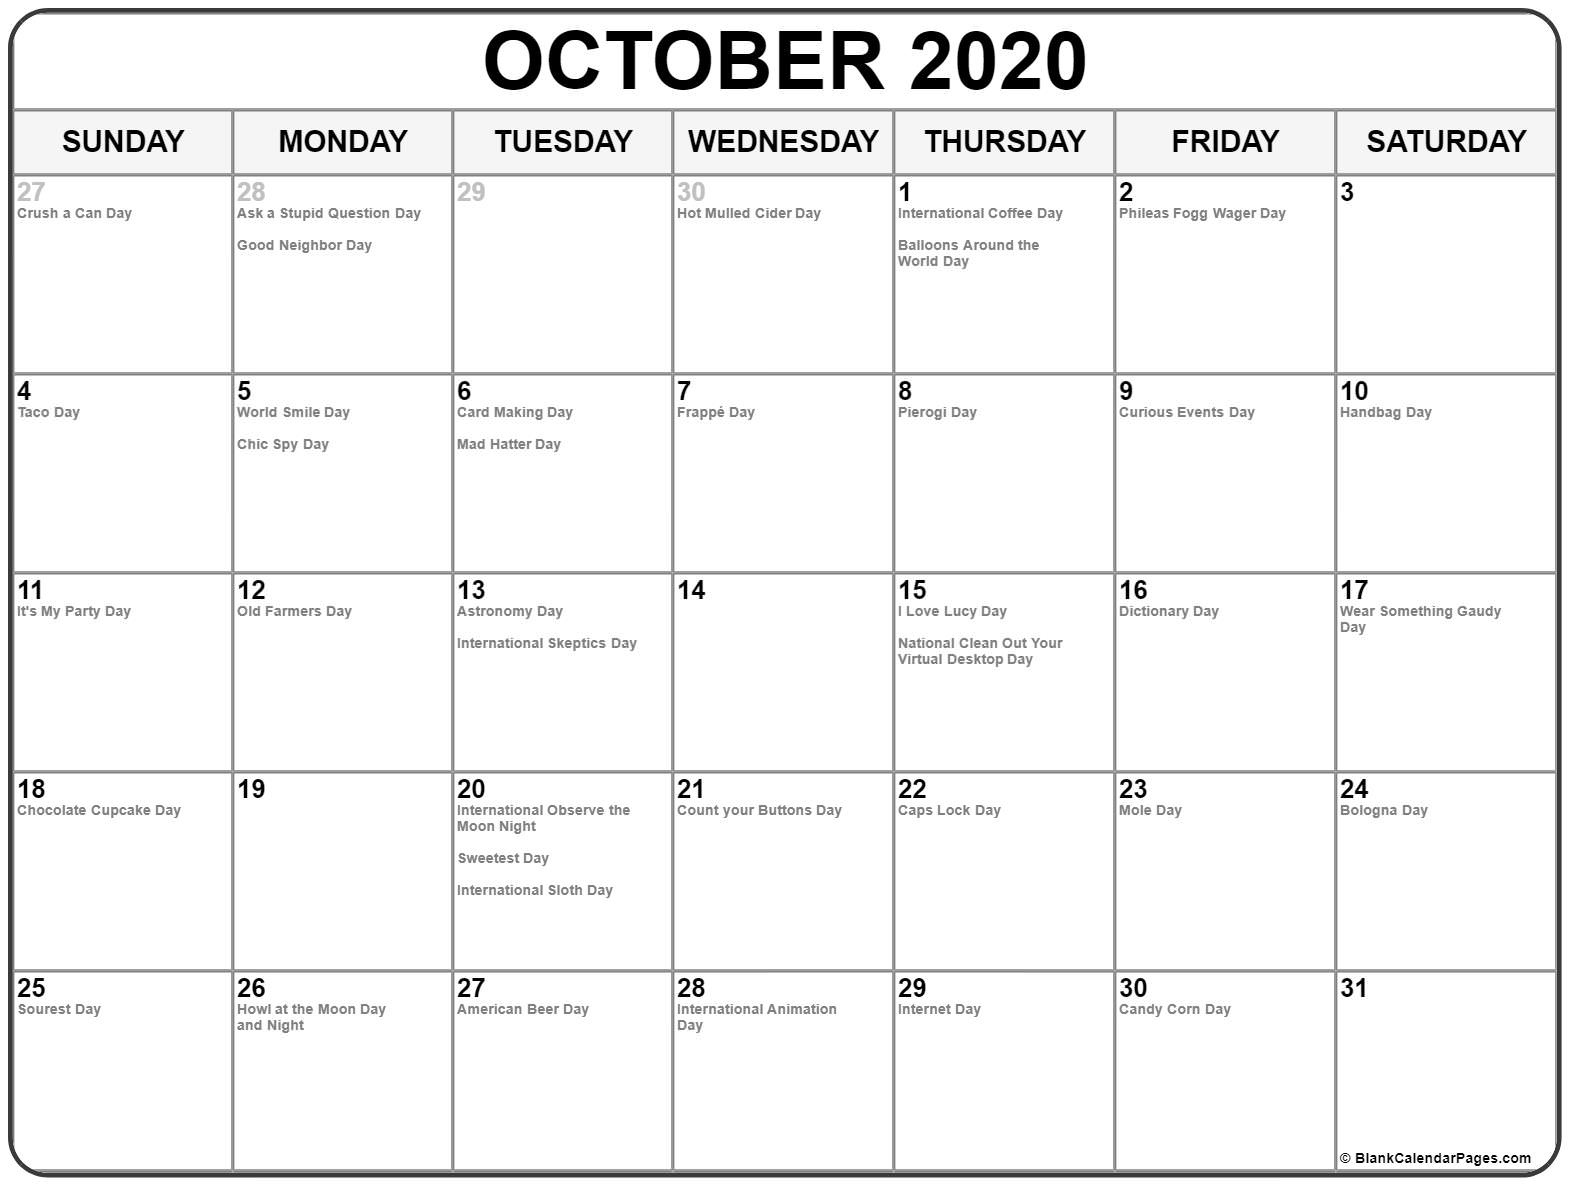 October 2020 Calendar With Holidays